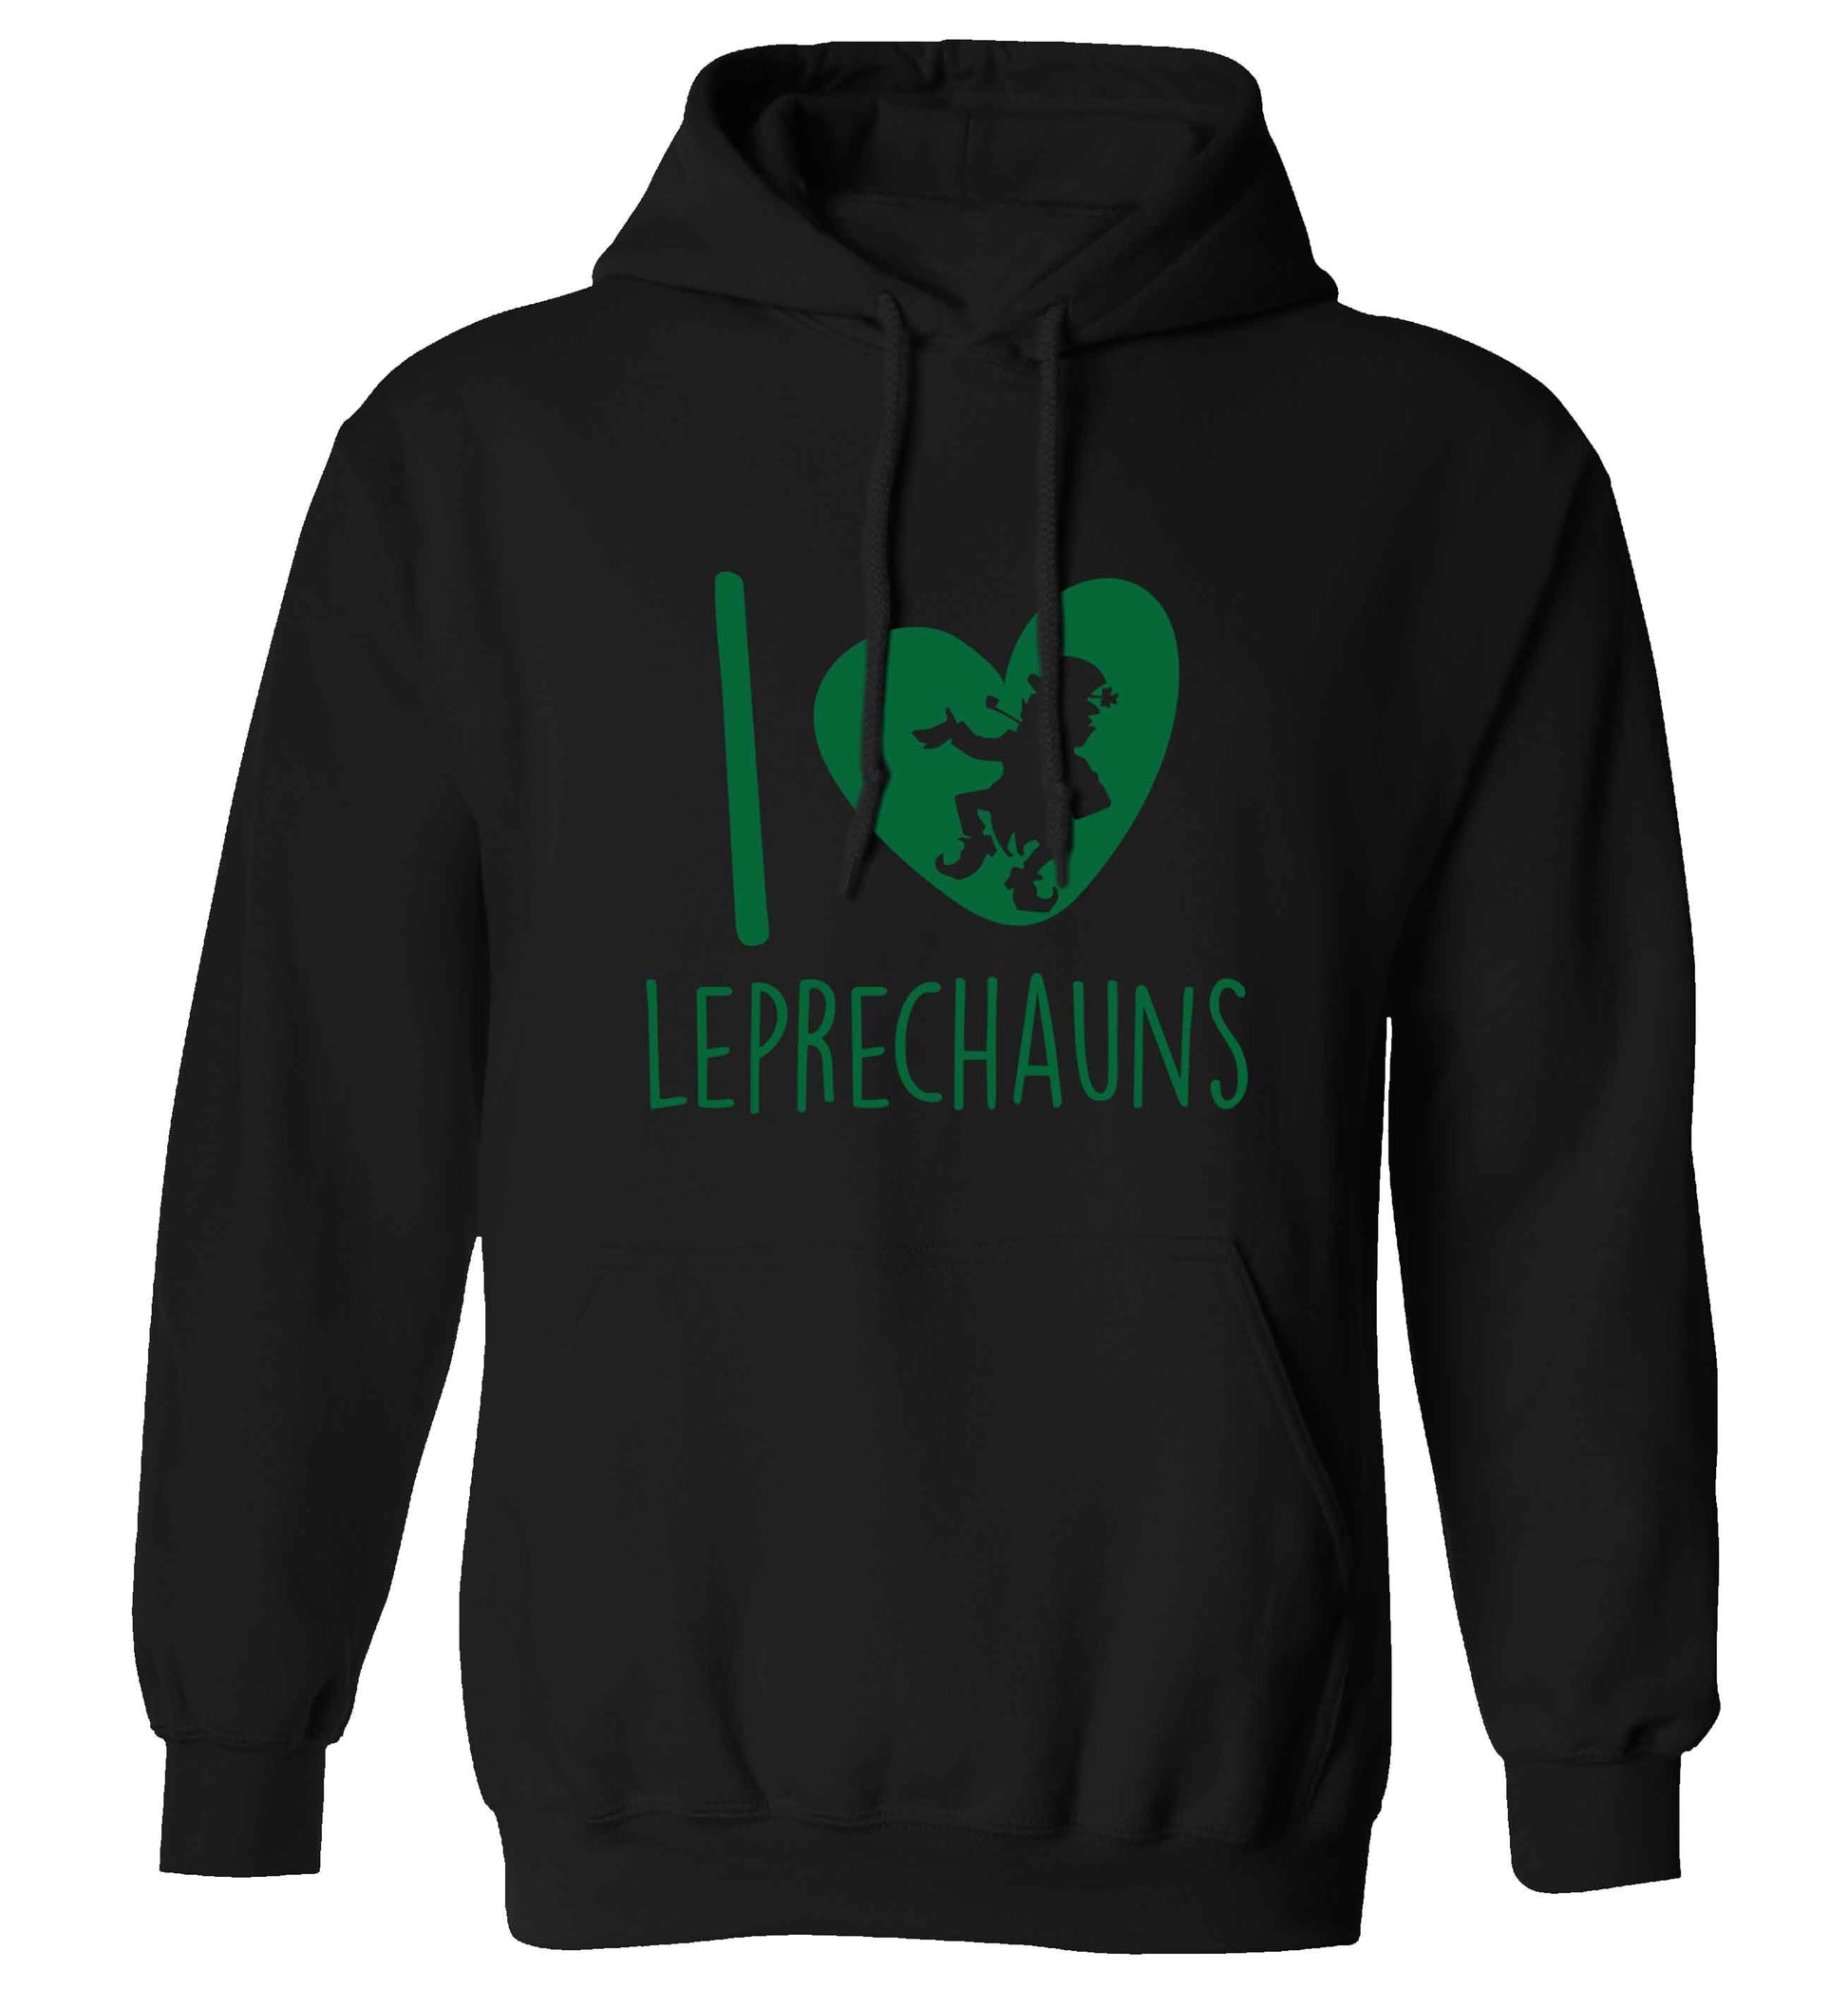 I love leprechauns adults unisex black hoodie 2XL